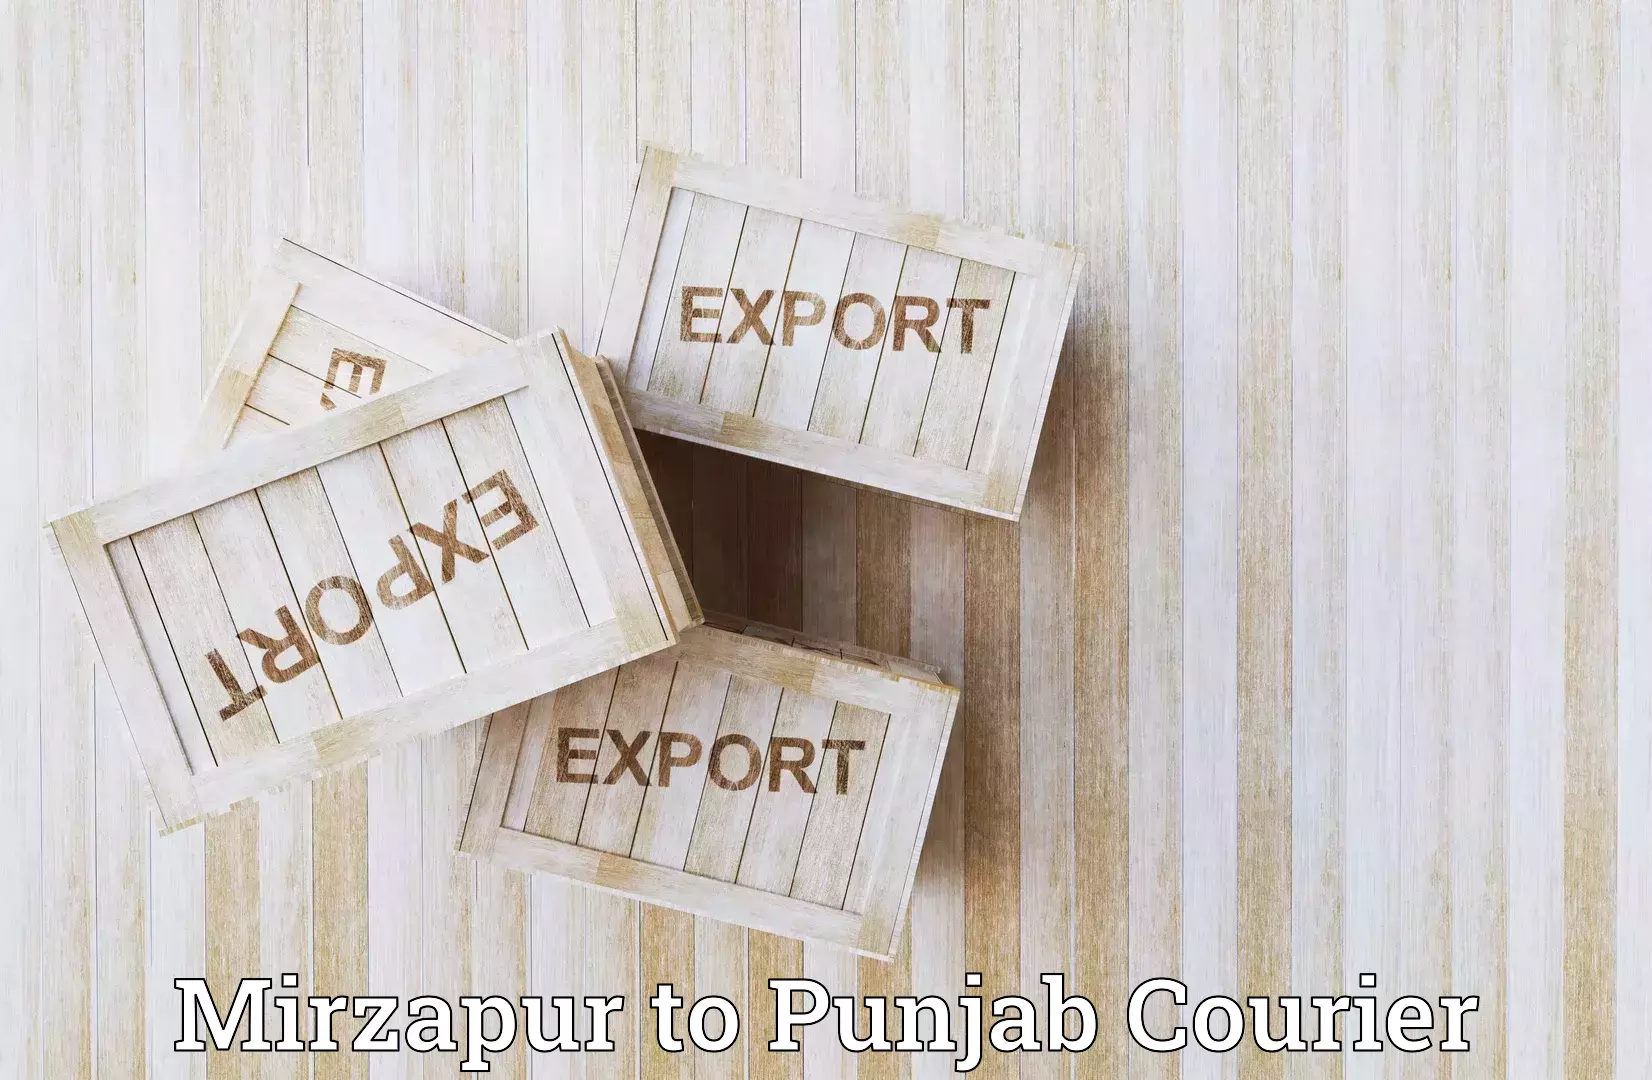 Courier service comparison Mirzapur to Fatehgarh Sahib